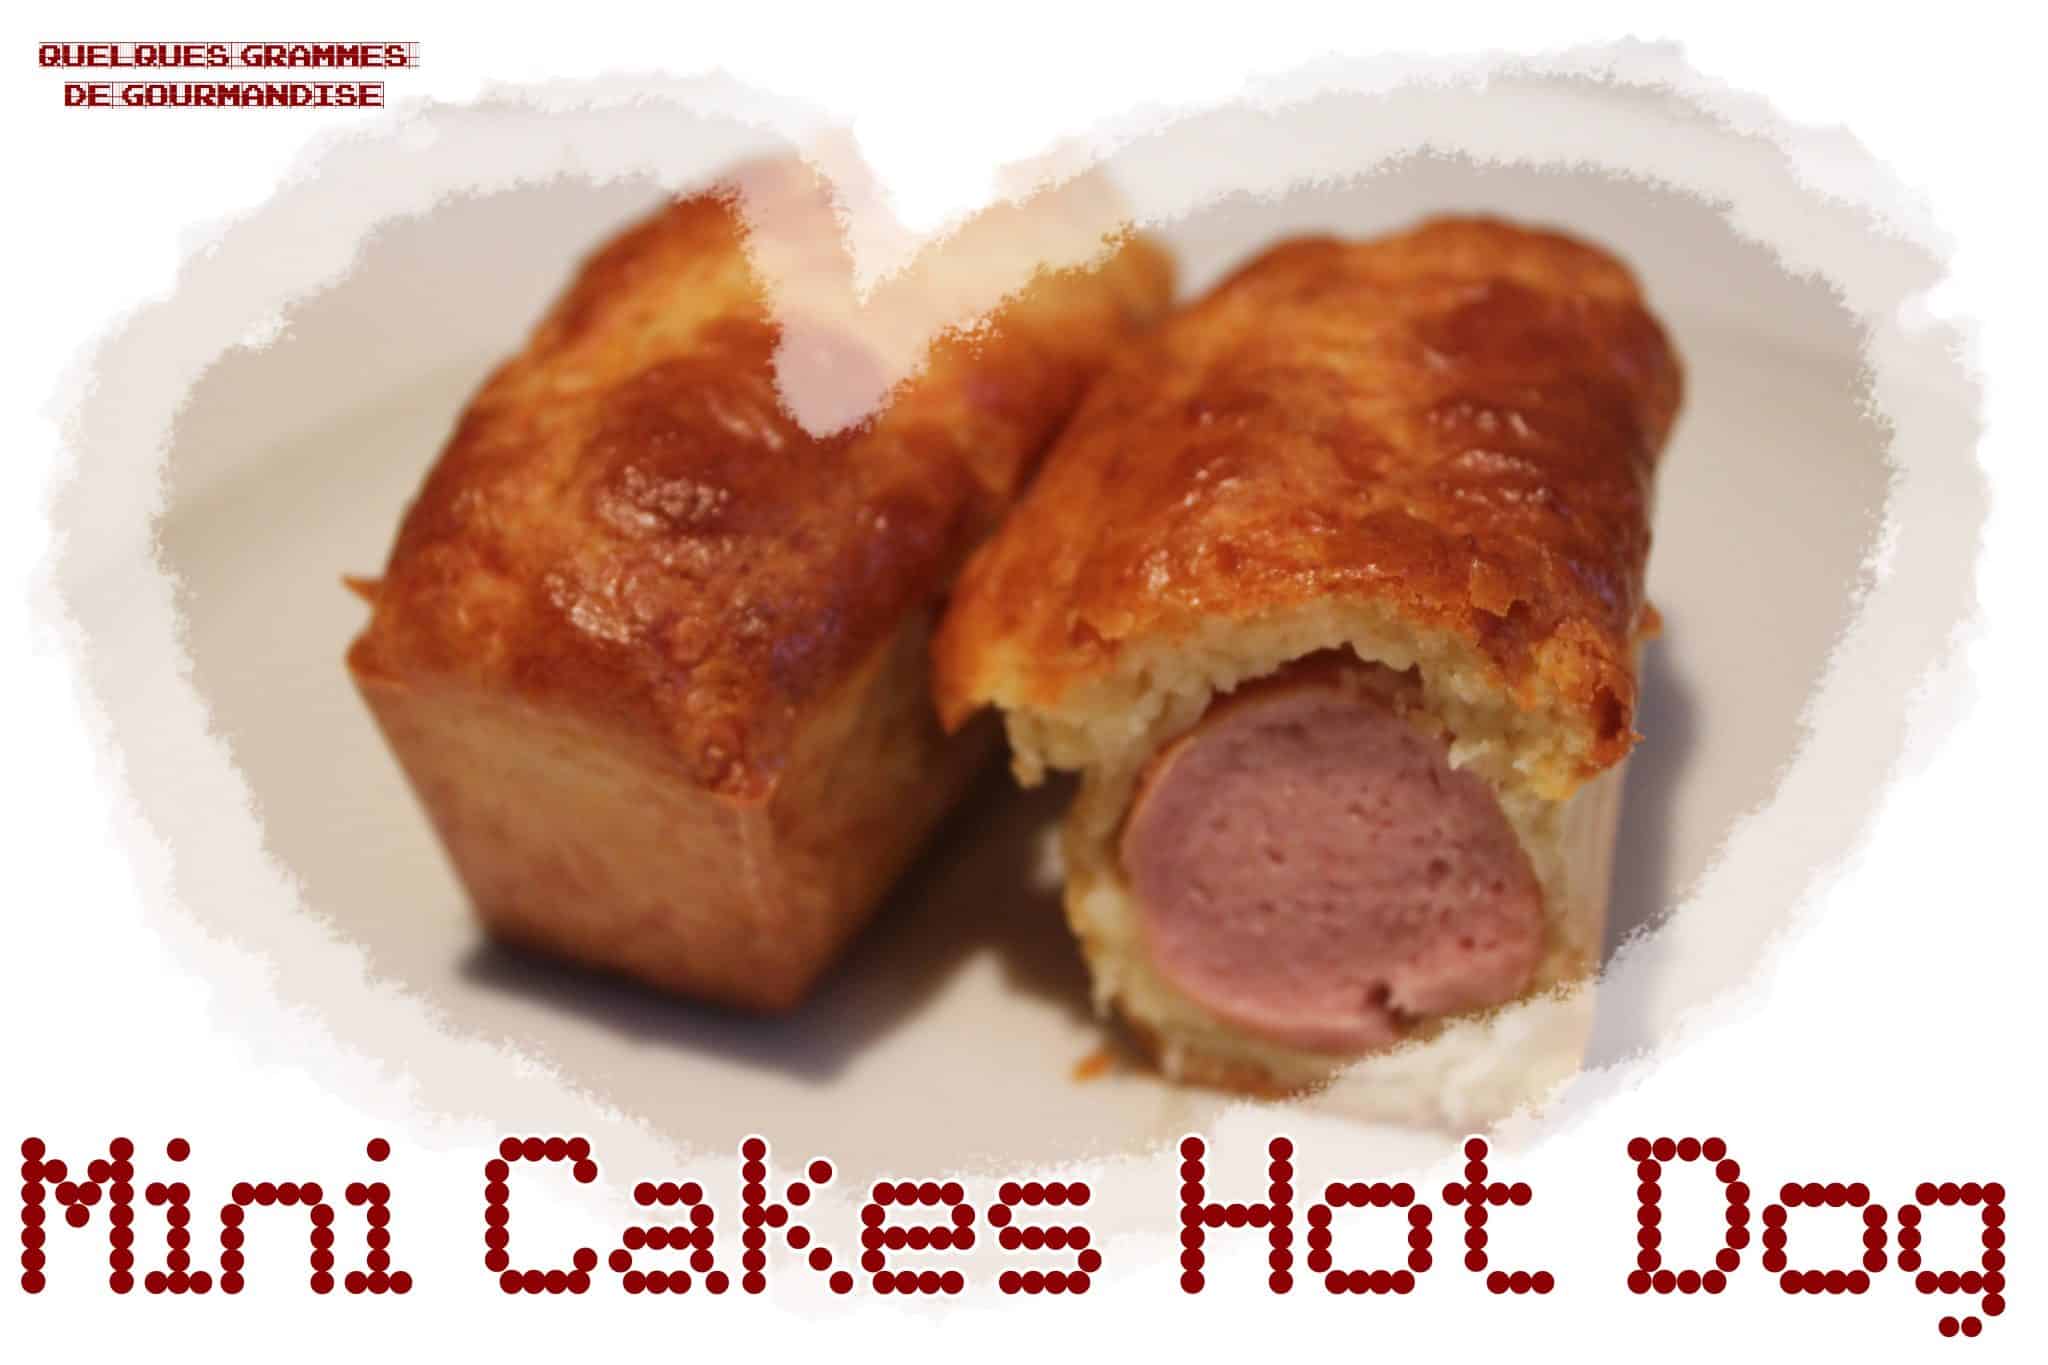 mini cakes hot-dog